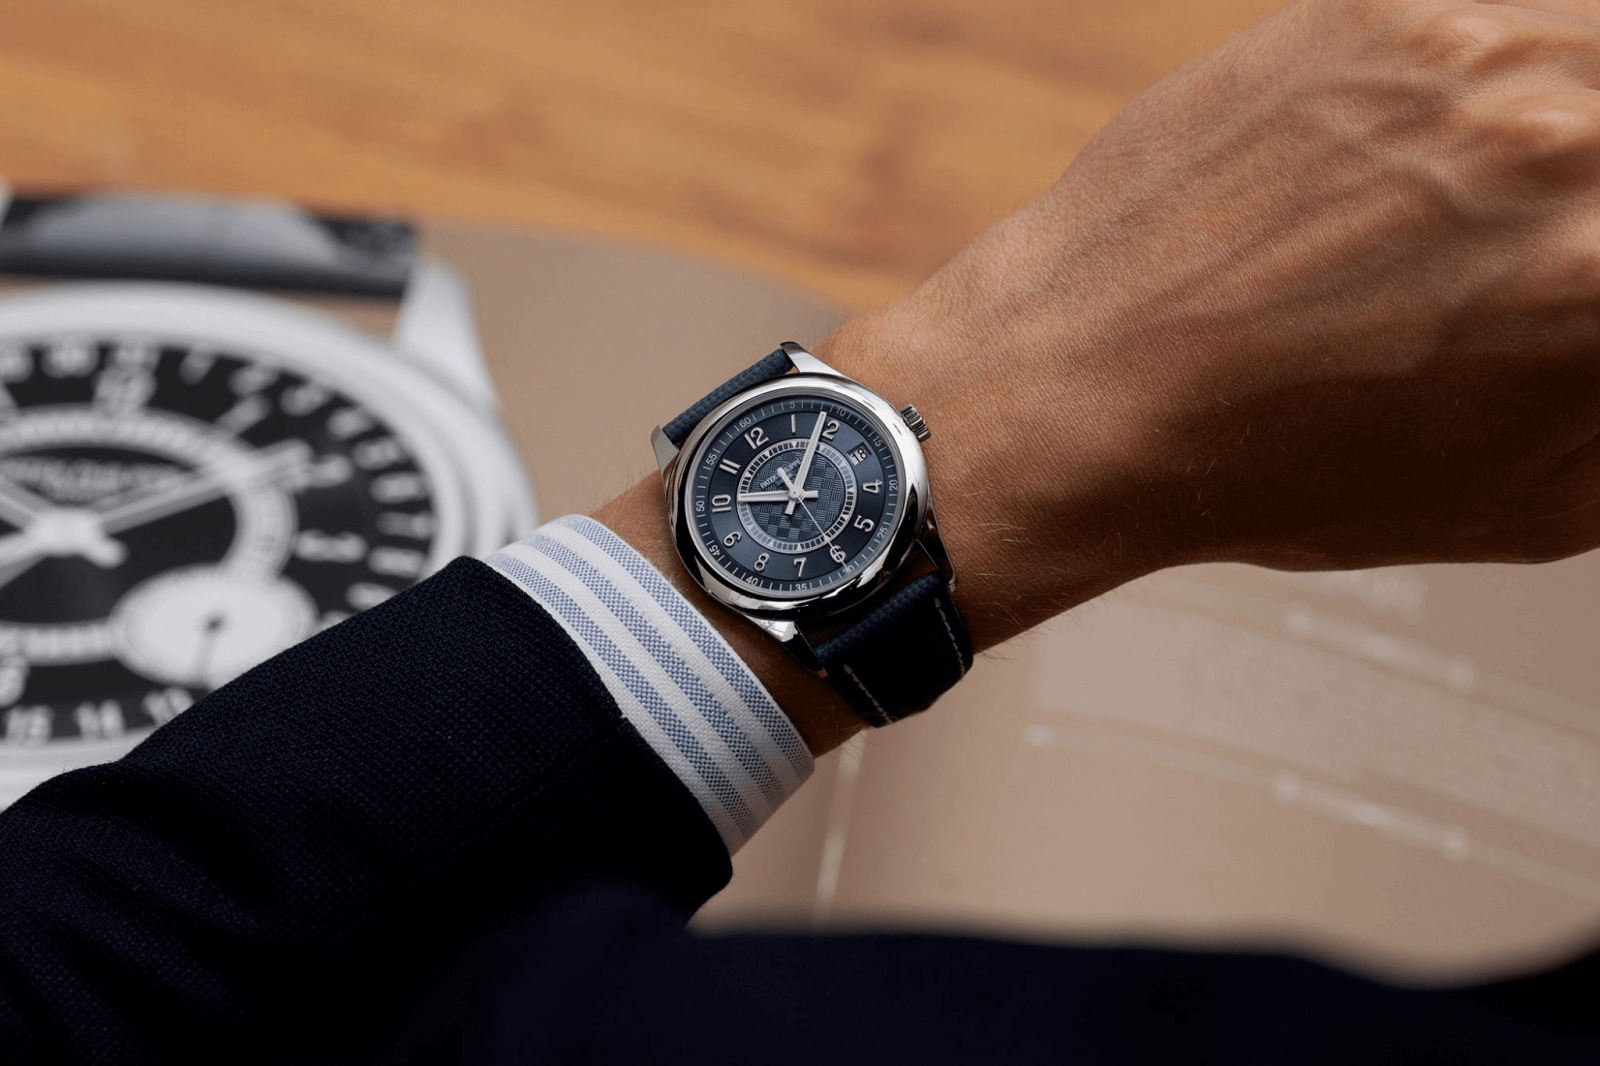 đồng hồ PATEK PHILIPPE CALATRAVA 6007A - PHIÊN BẢN KỶ NIỆM “MANUFACTURE 2019”